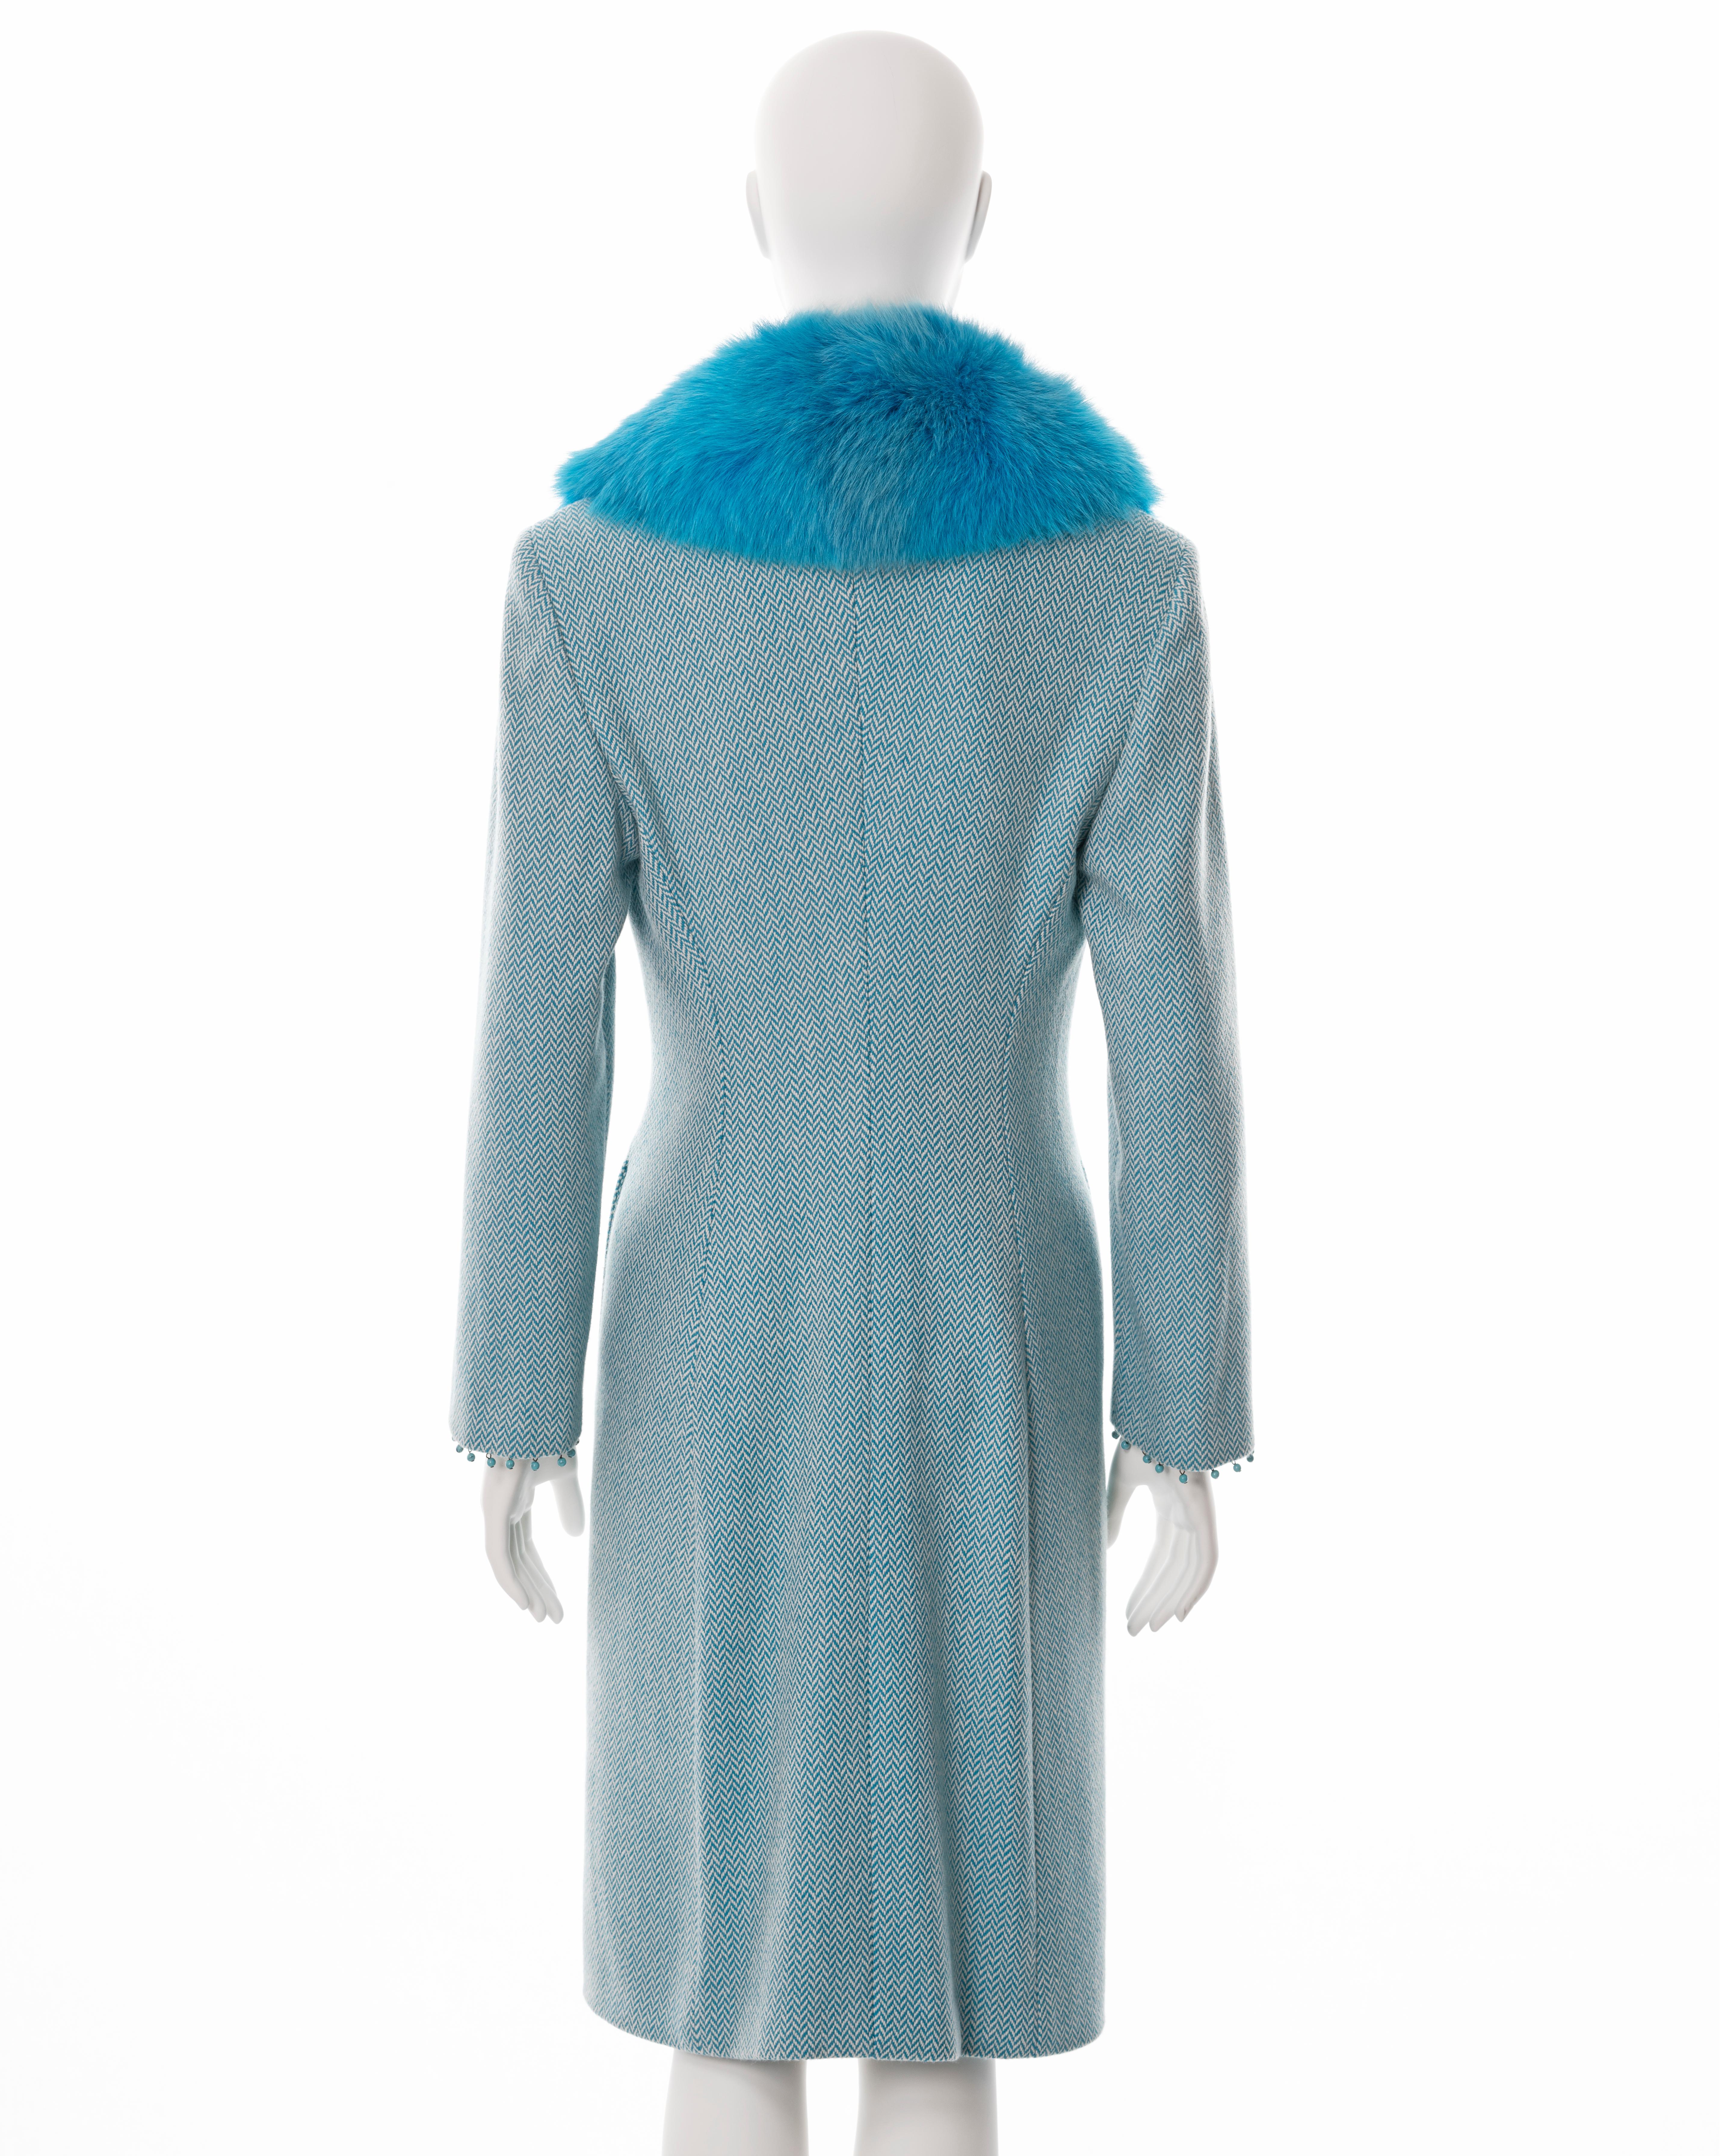 Gianni Versace herringbone tweed coat with blue fox fur collar, fw 1999 For Sale 3